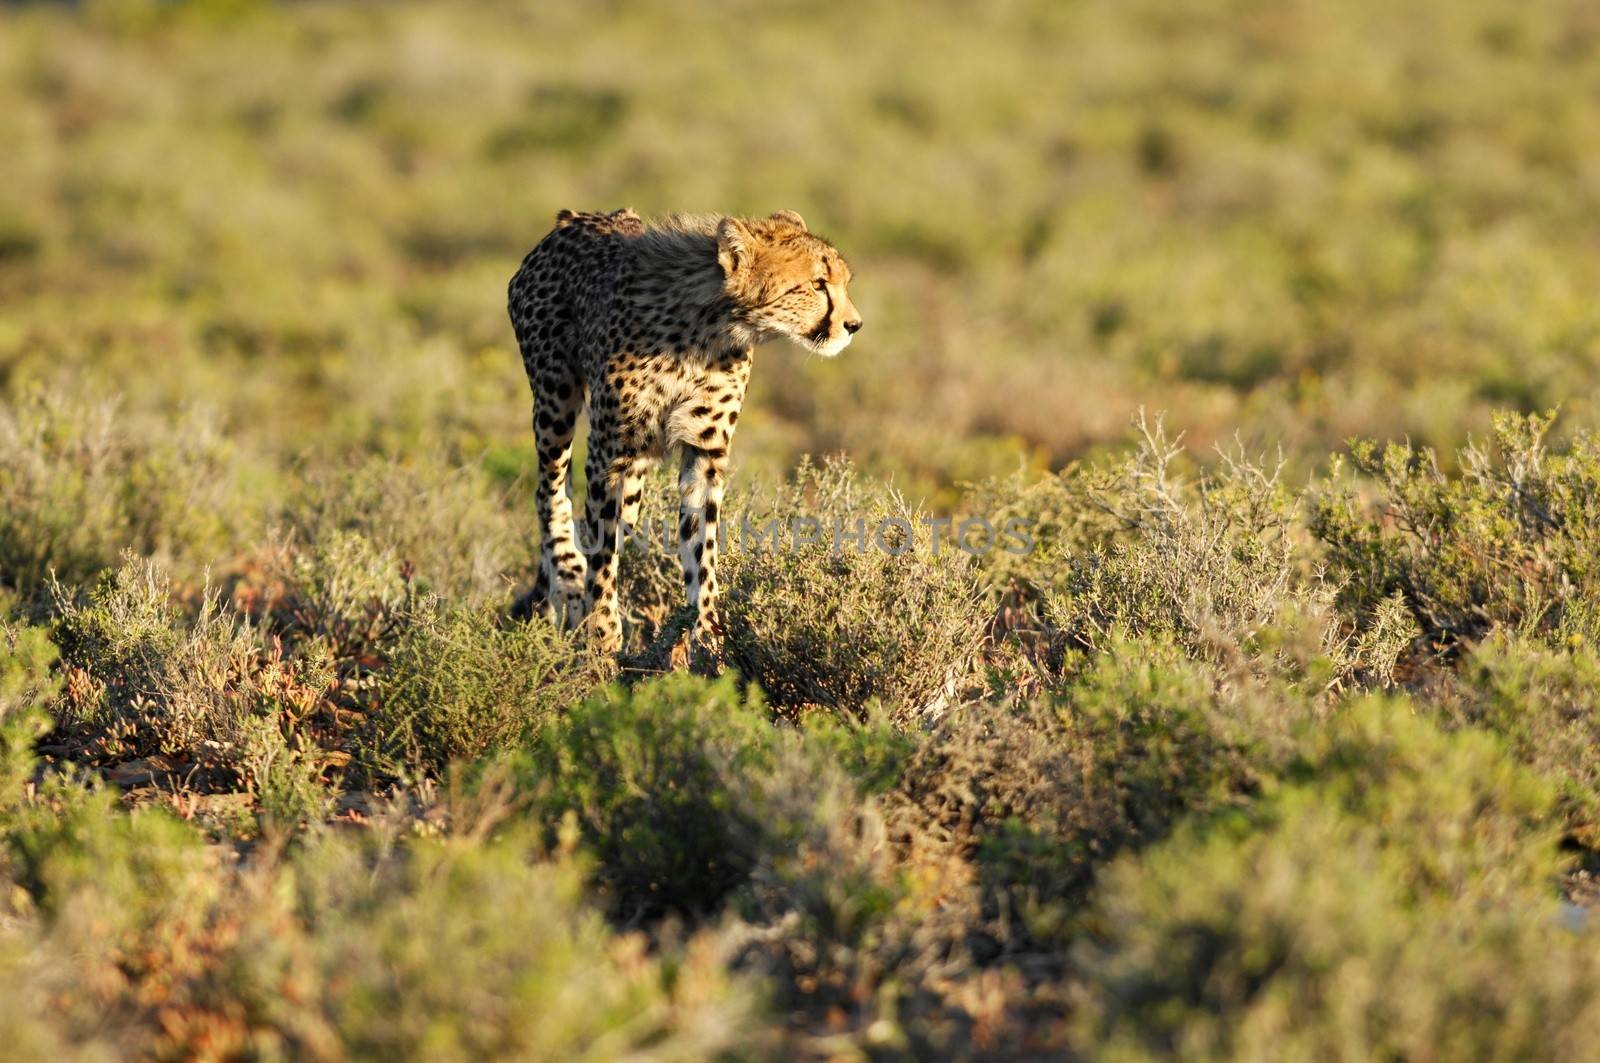 A shot of a wild cheetah in captivity